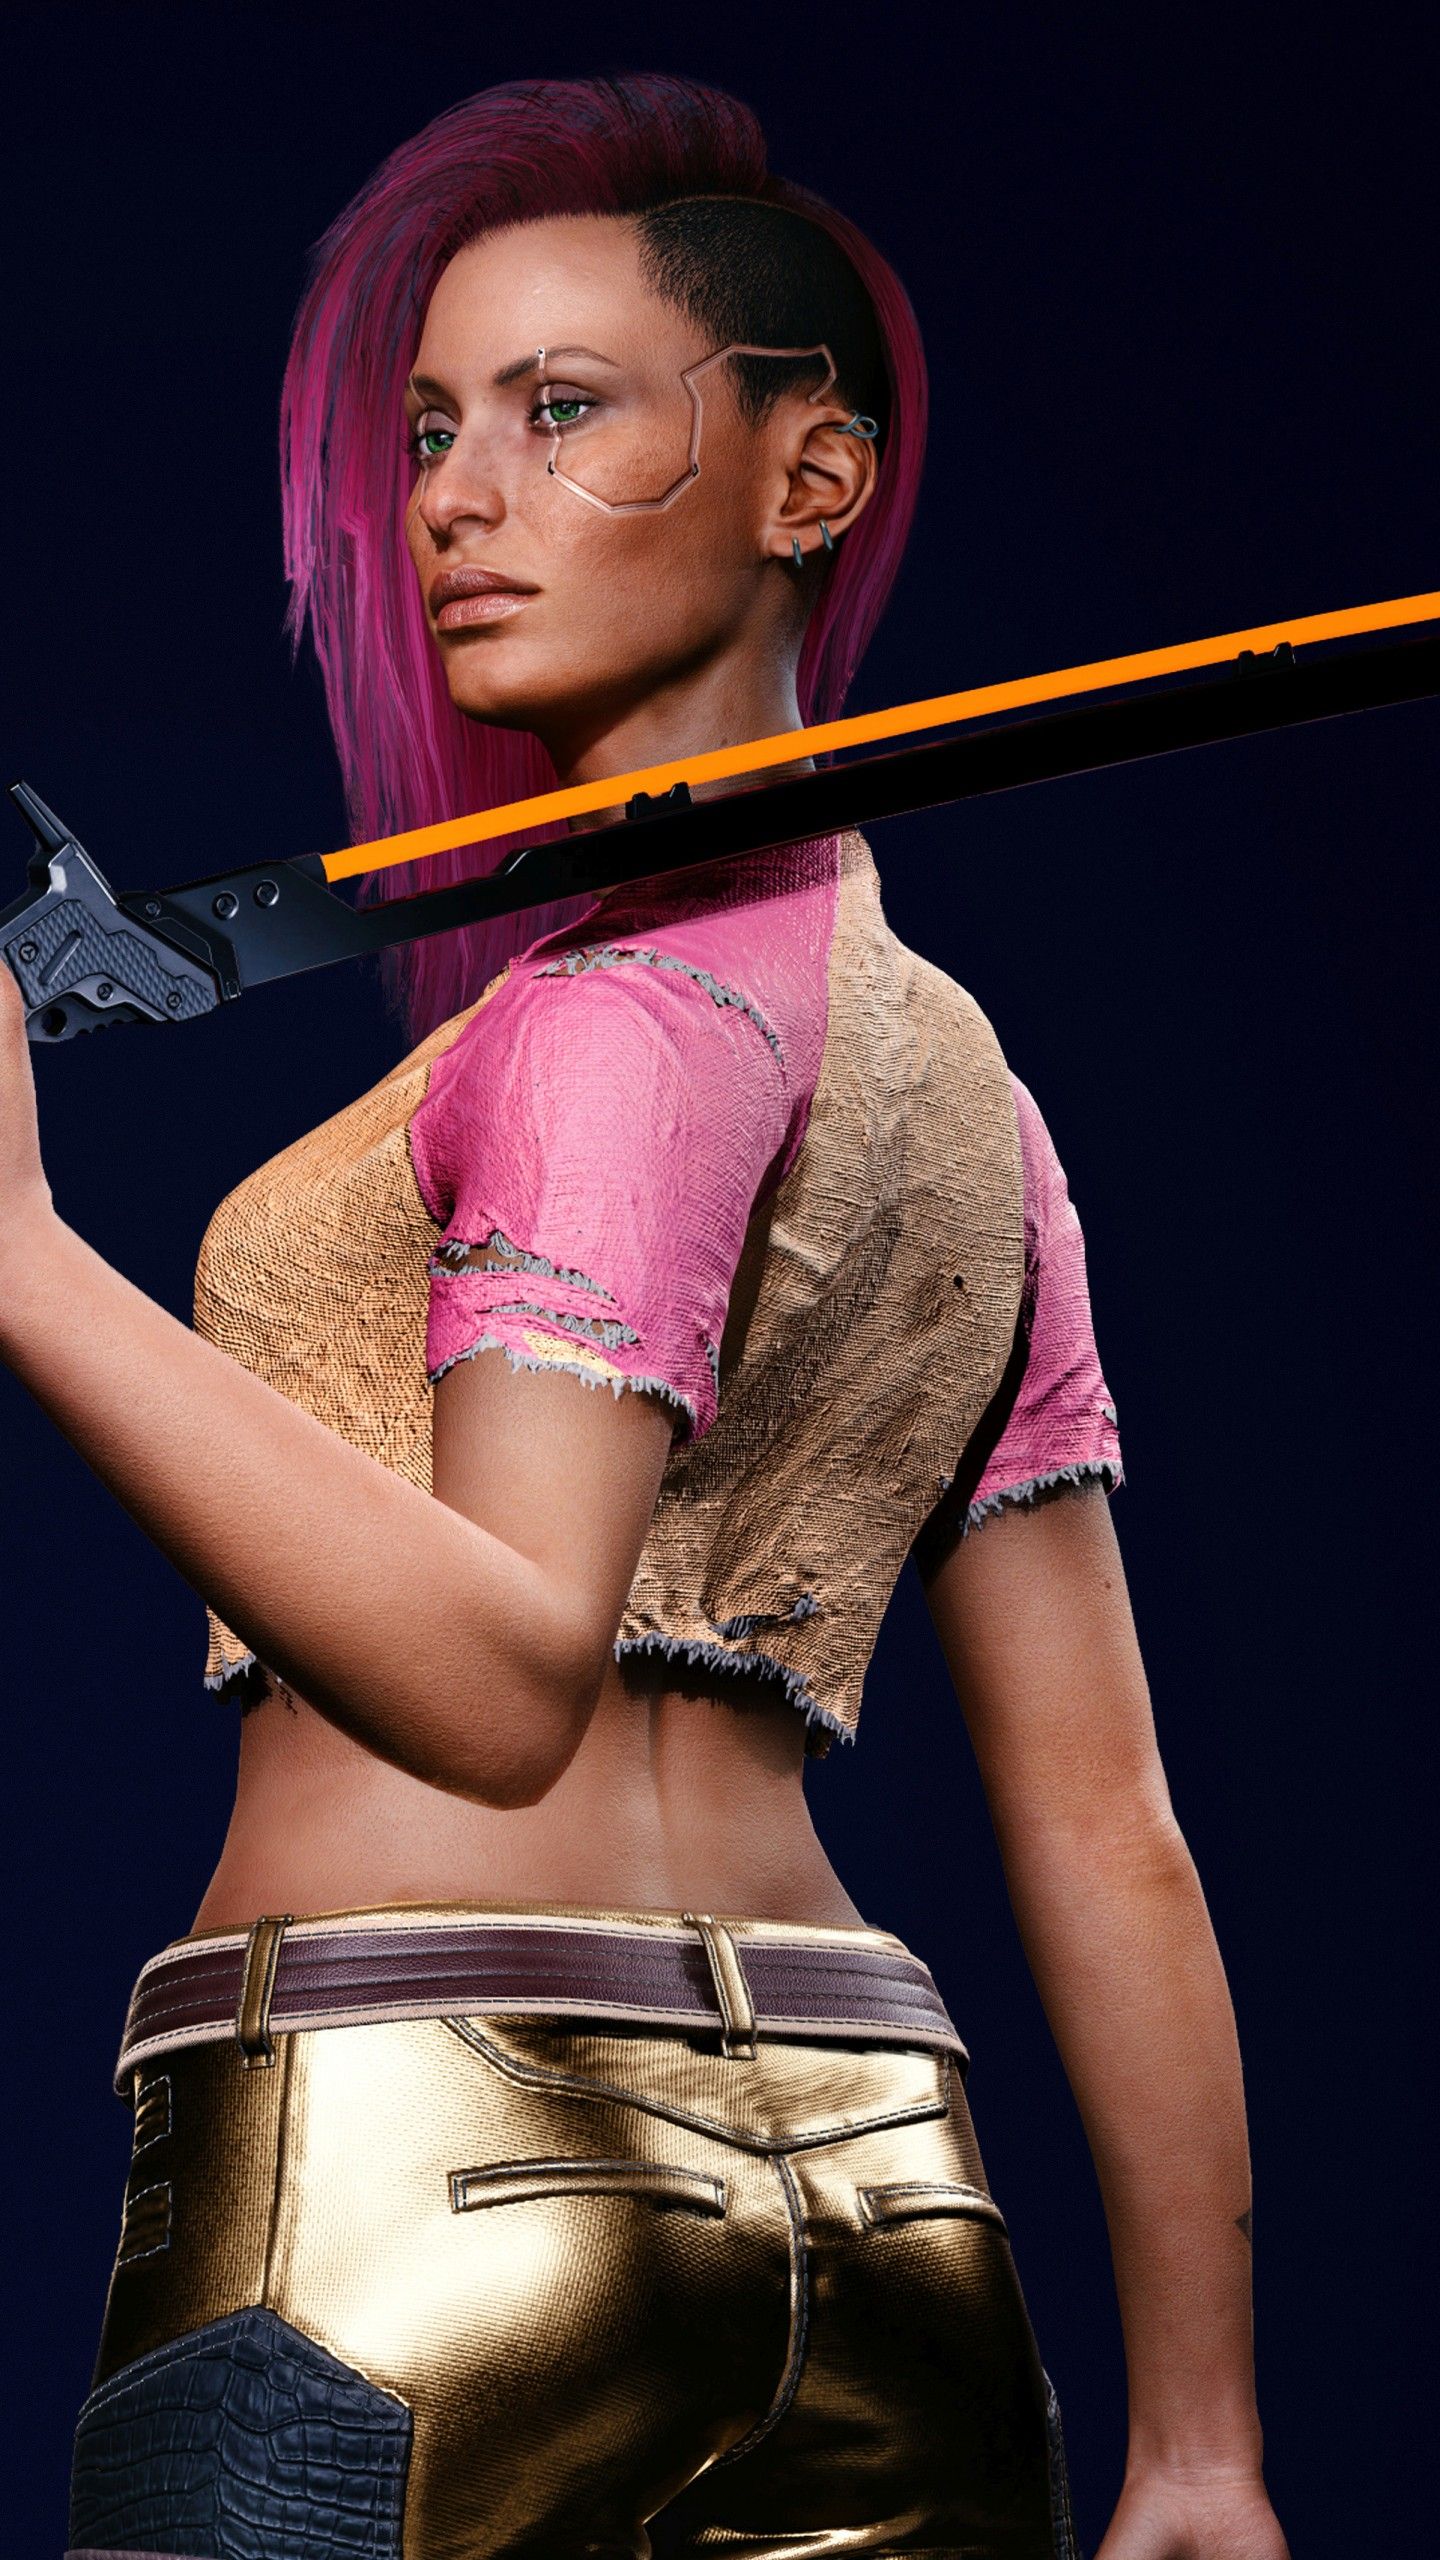 Cyberpunk girl 4K Wallpaper, Cyberpunk Xbox Series X, Xbox One, PlayStation Google Stadia, Games